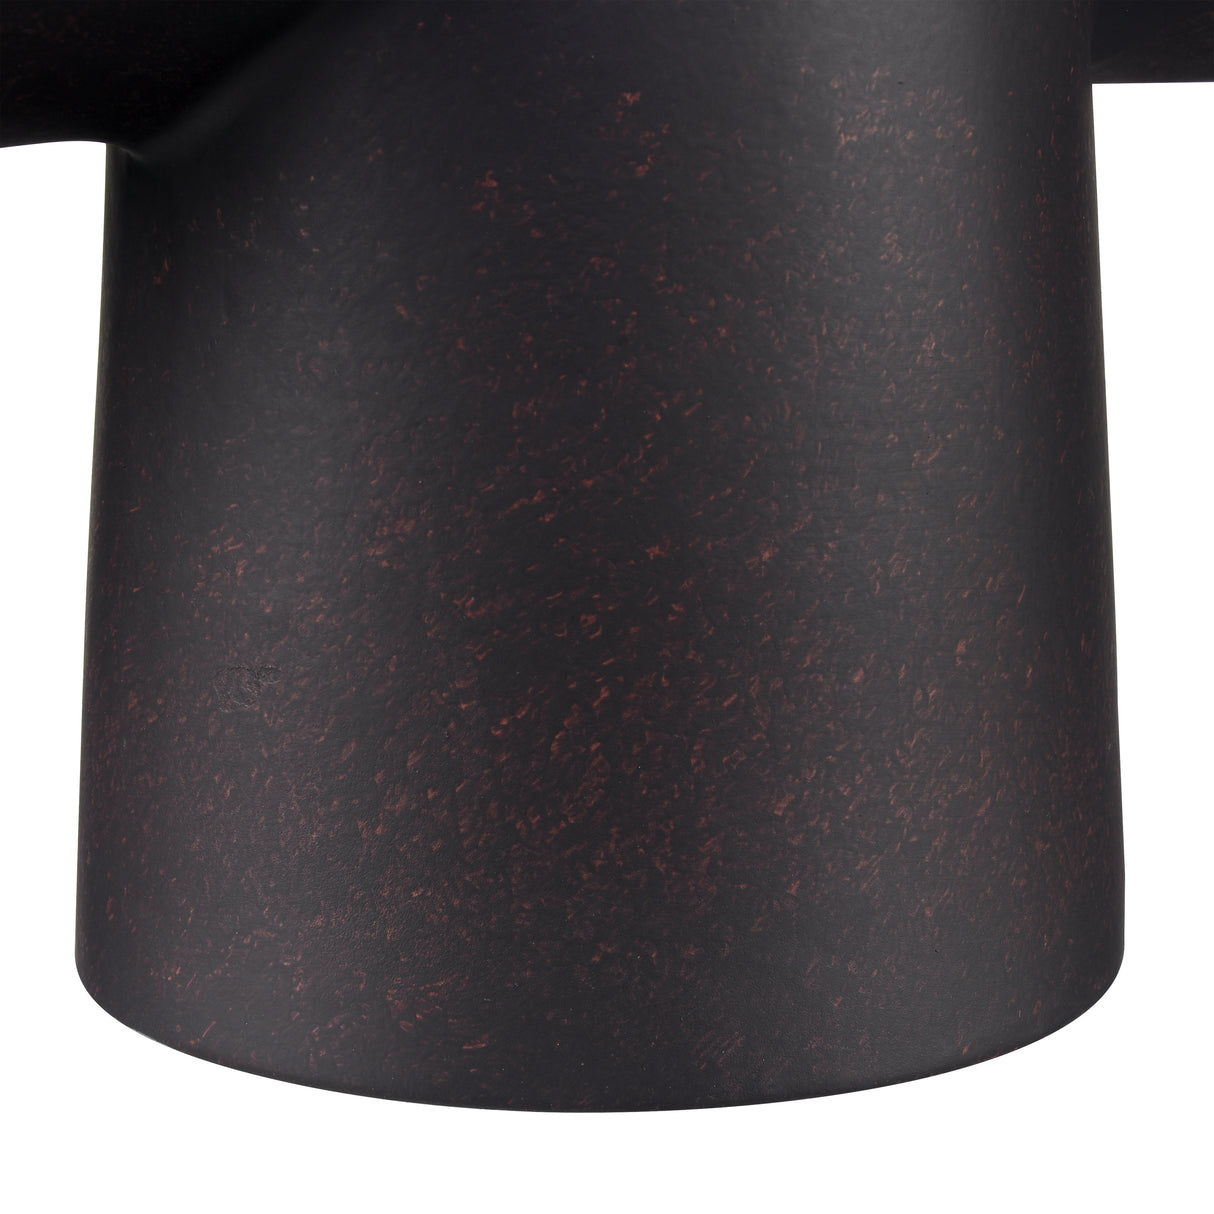 Elk H0017-10424 Hawking Vase - Extra Large Black